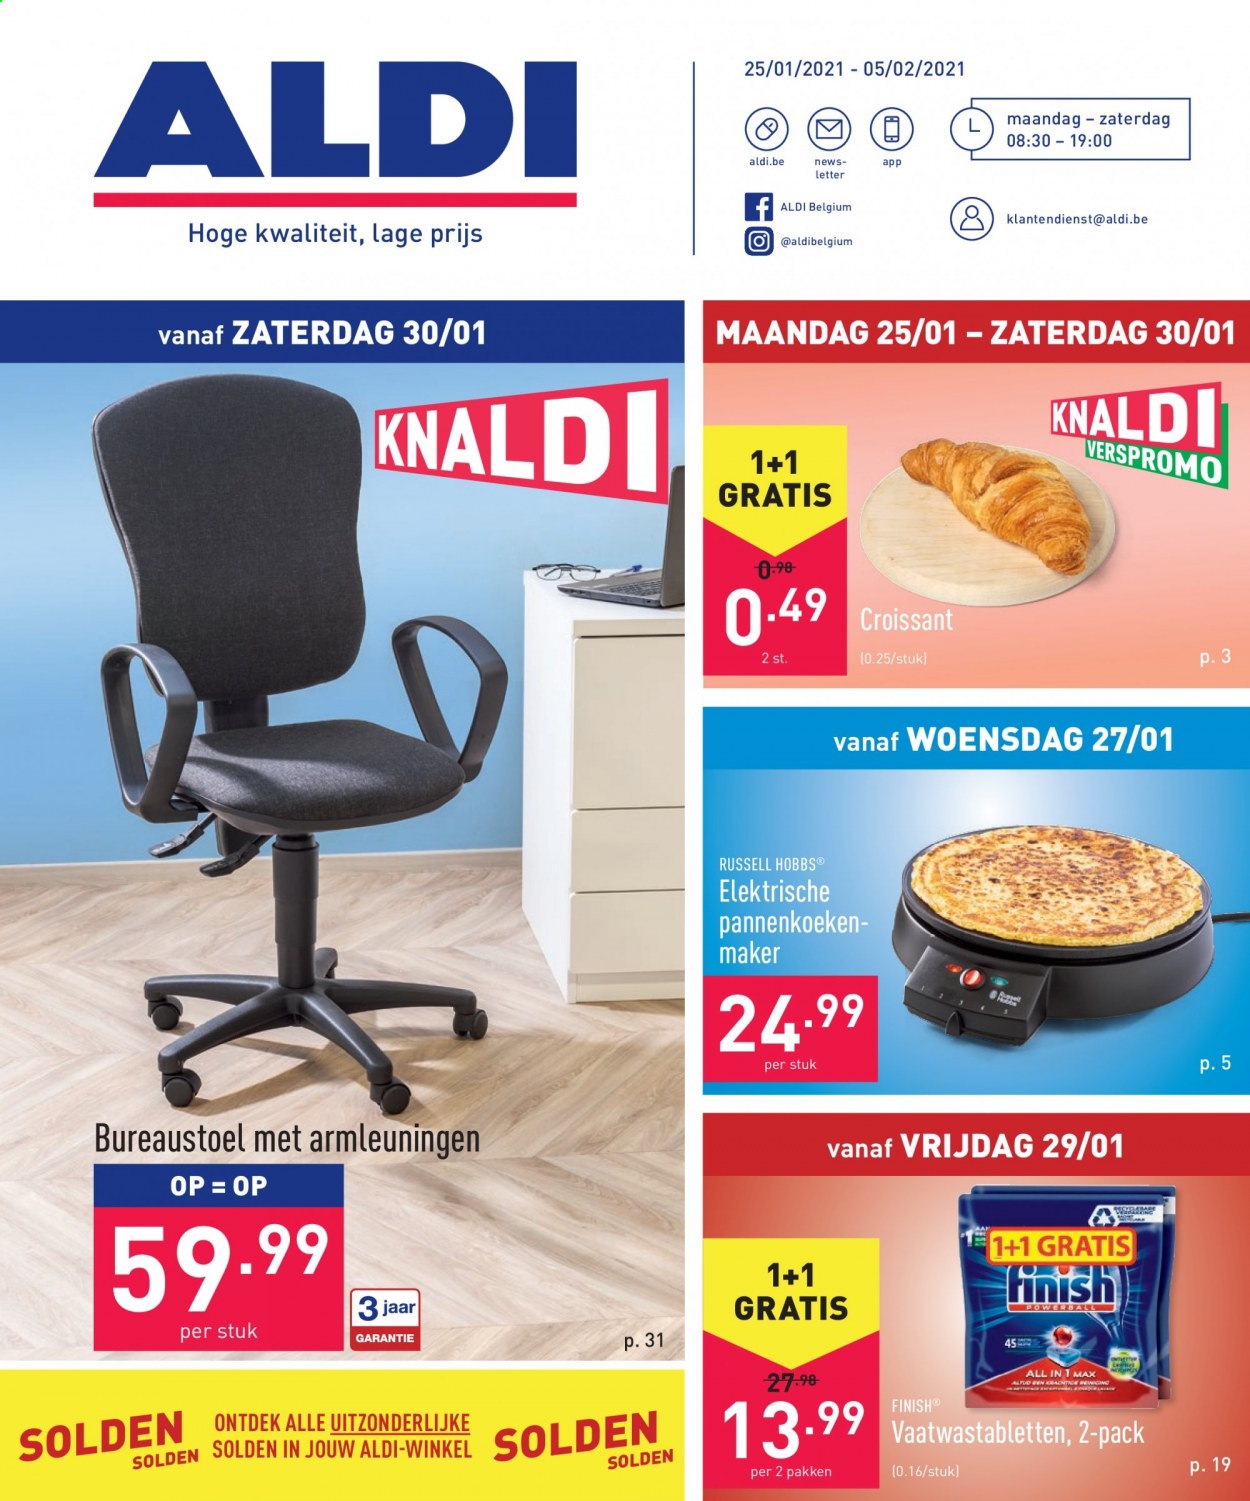 thumbnail - ALDI-aanbieding - 25/01/2021 - 05/02/2021 -  producten in de aanbieding - vaatwastabletten, croissant, Finish. Pagina 1.